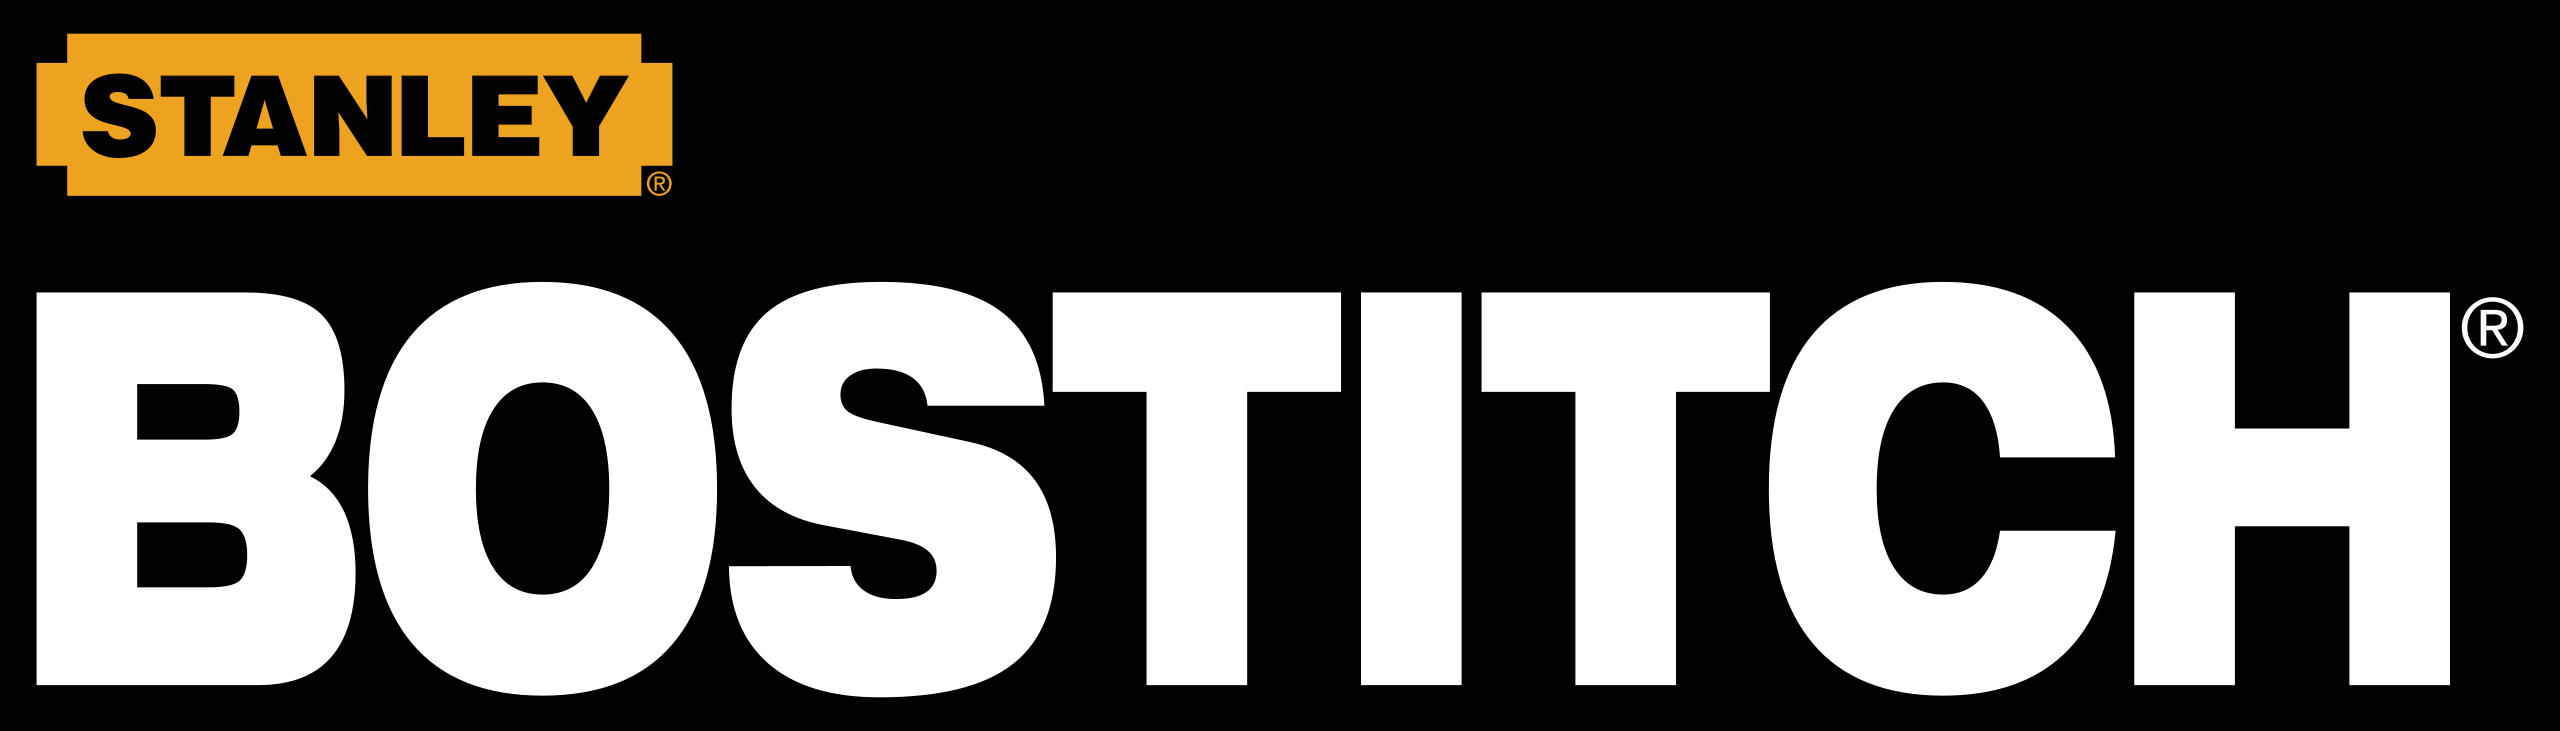 https://upload.wikimedia.org/wikipedia/commons/thumb/c/cb/Stanley_Bostitch_Logo.svg/2560px-Stanley_Bostitch_Logo.svg.png